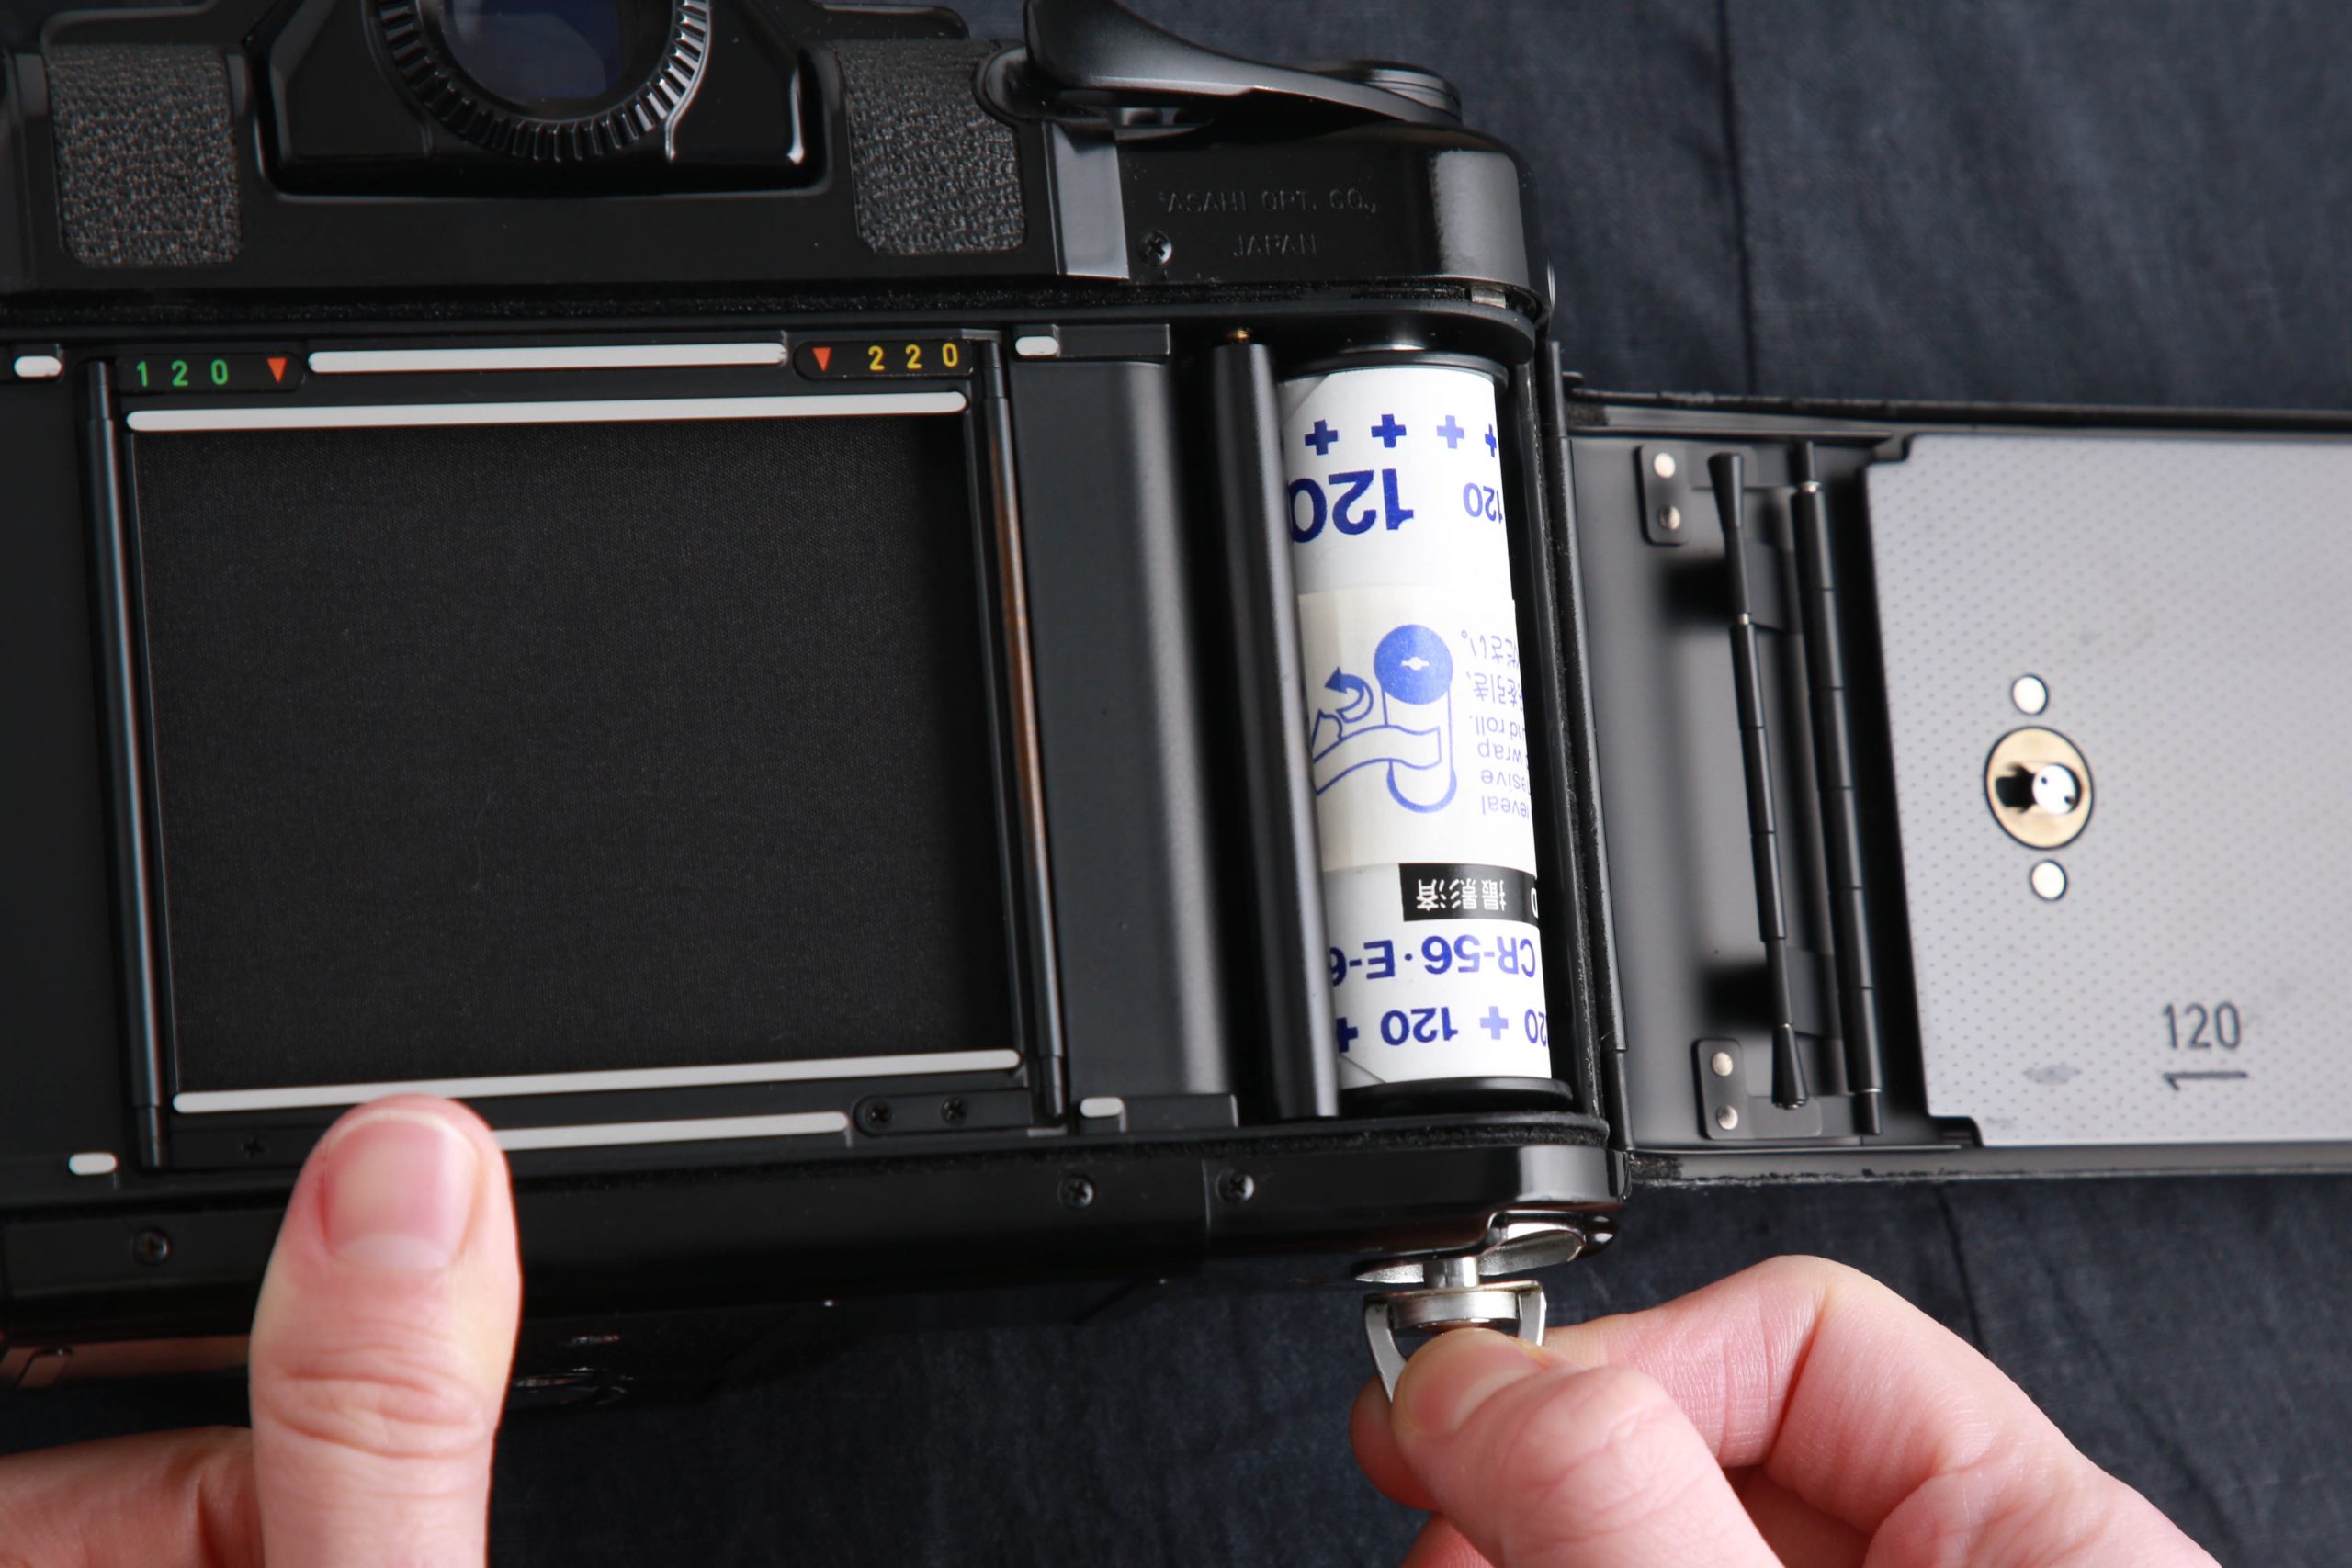 SZ009 PENTAX 6×7 中判カメラ レンズ 1:2.4/105